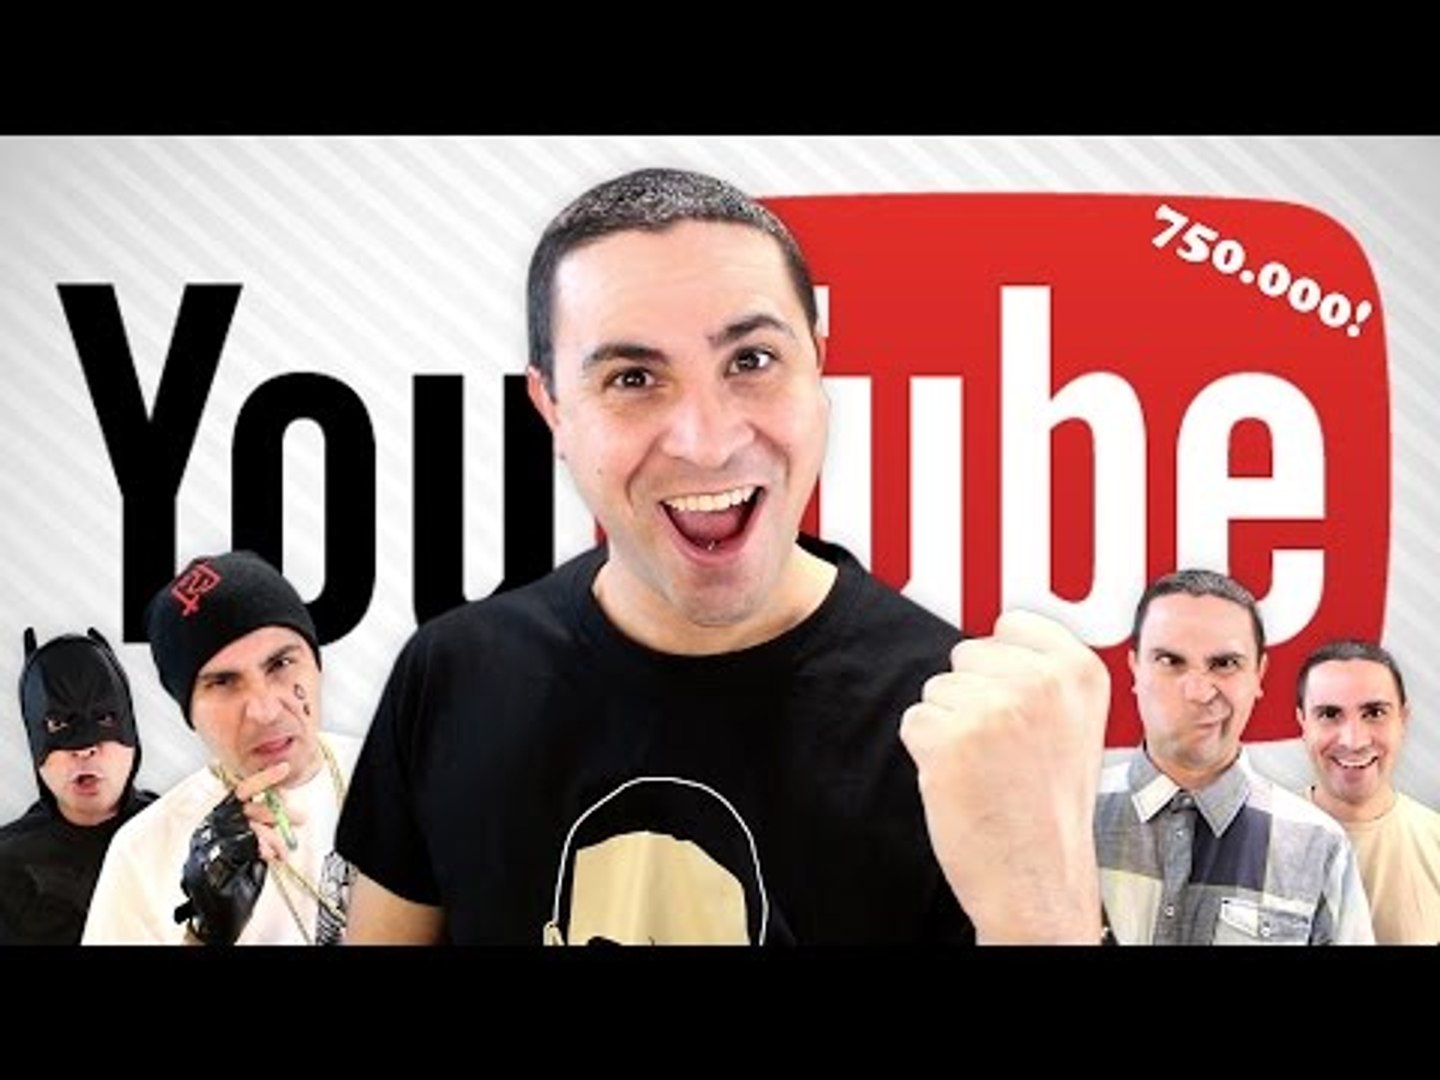 750.000! | 2J - video Dailymotion